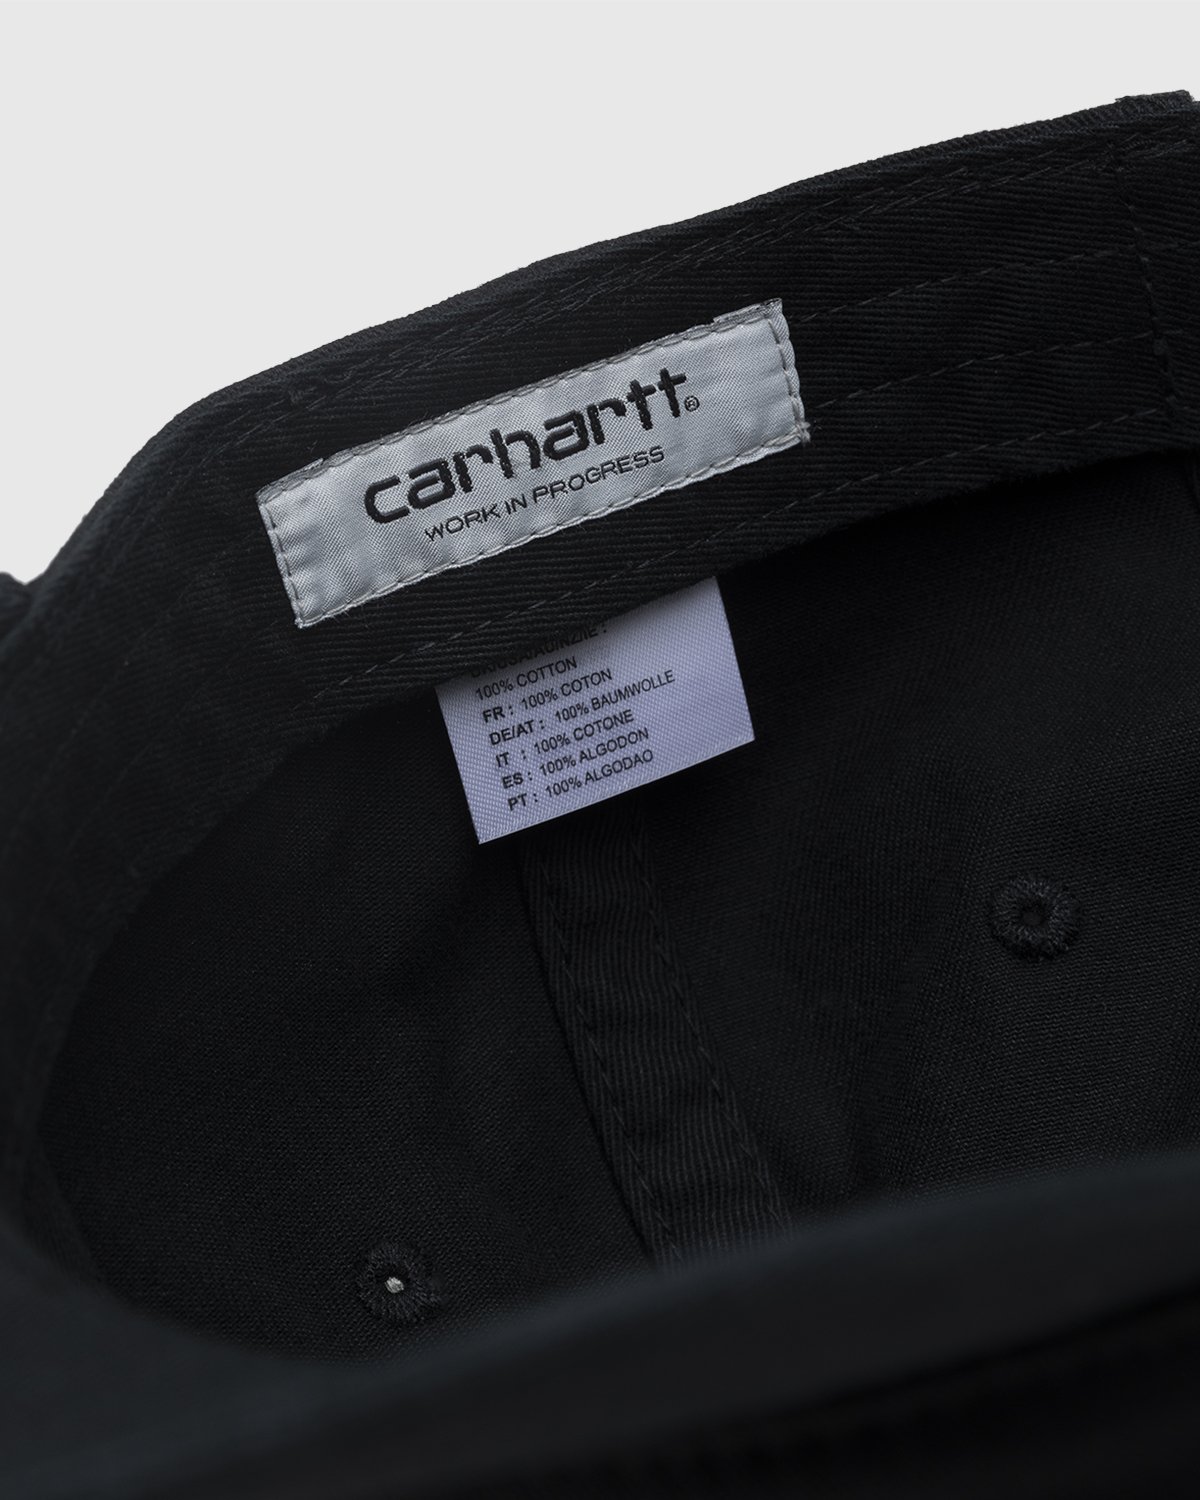 Carhartt WIP - Chaos Cap Black - Accessories - Black - Image 3